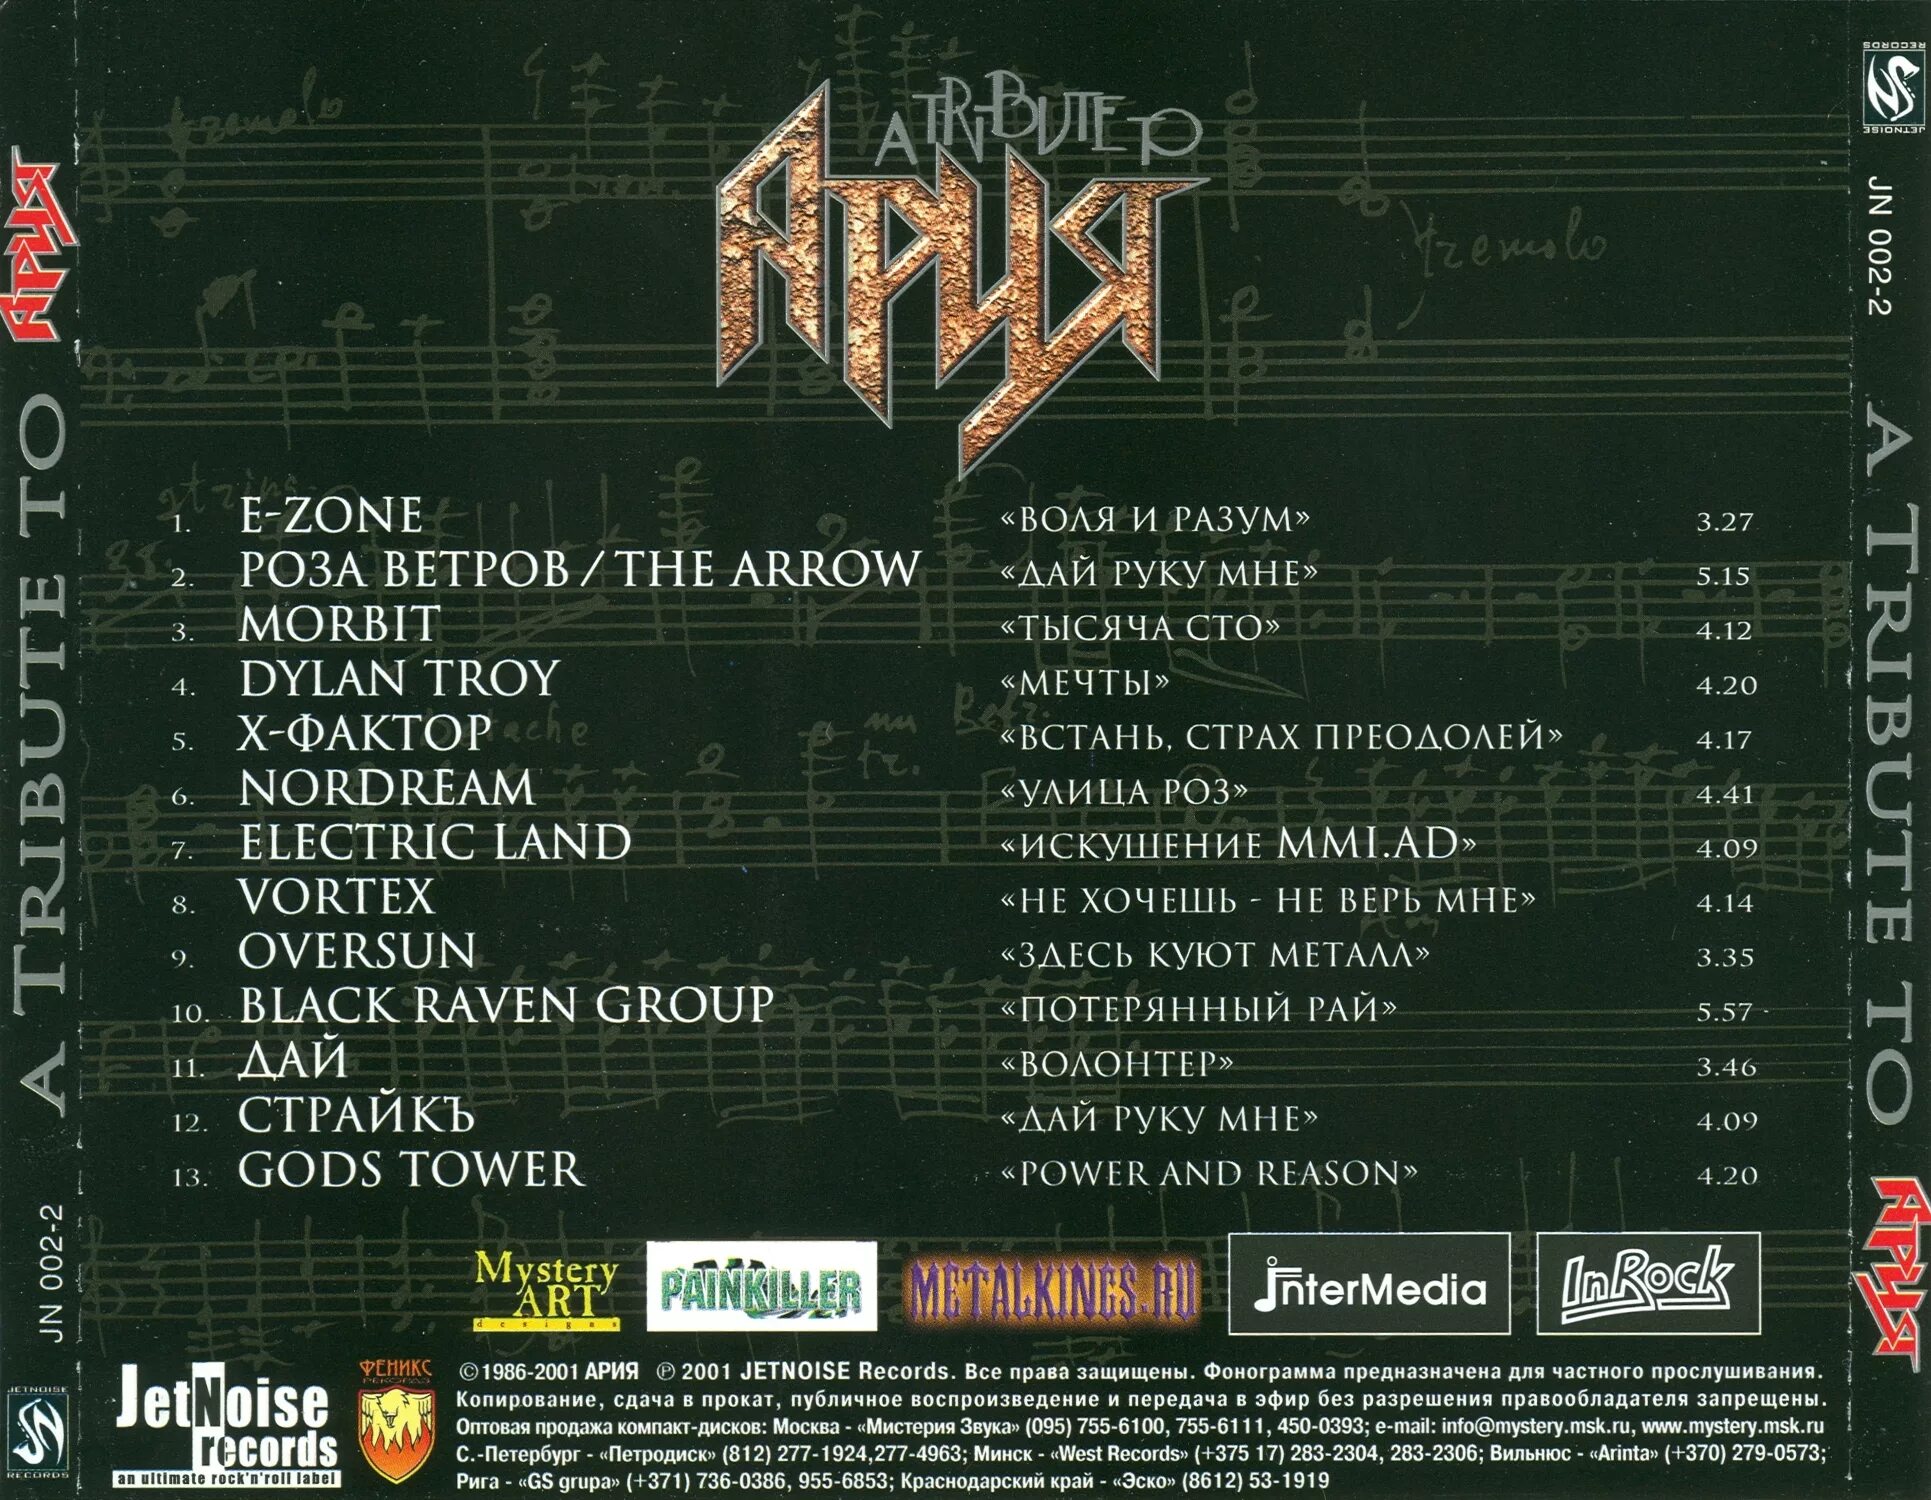 Песни без даты. Ария Tribute to 2001. A Tribute to Ария. Трибьют-альбом трибьют-альбомы. Хронология группы Ария.